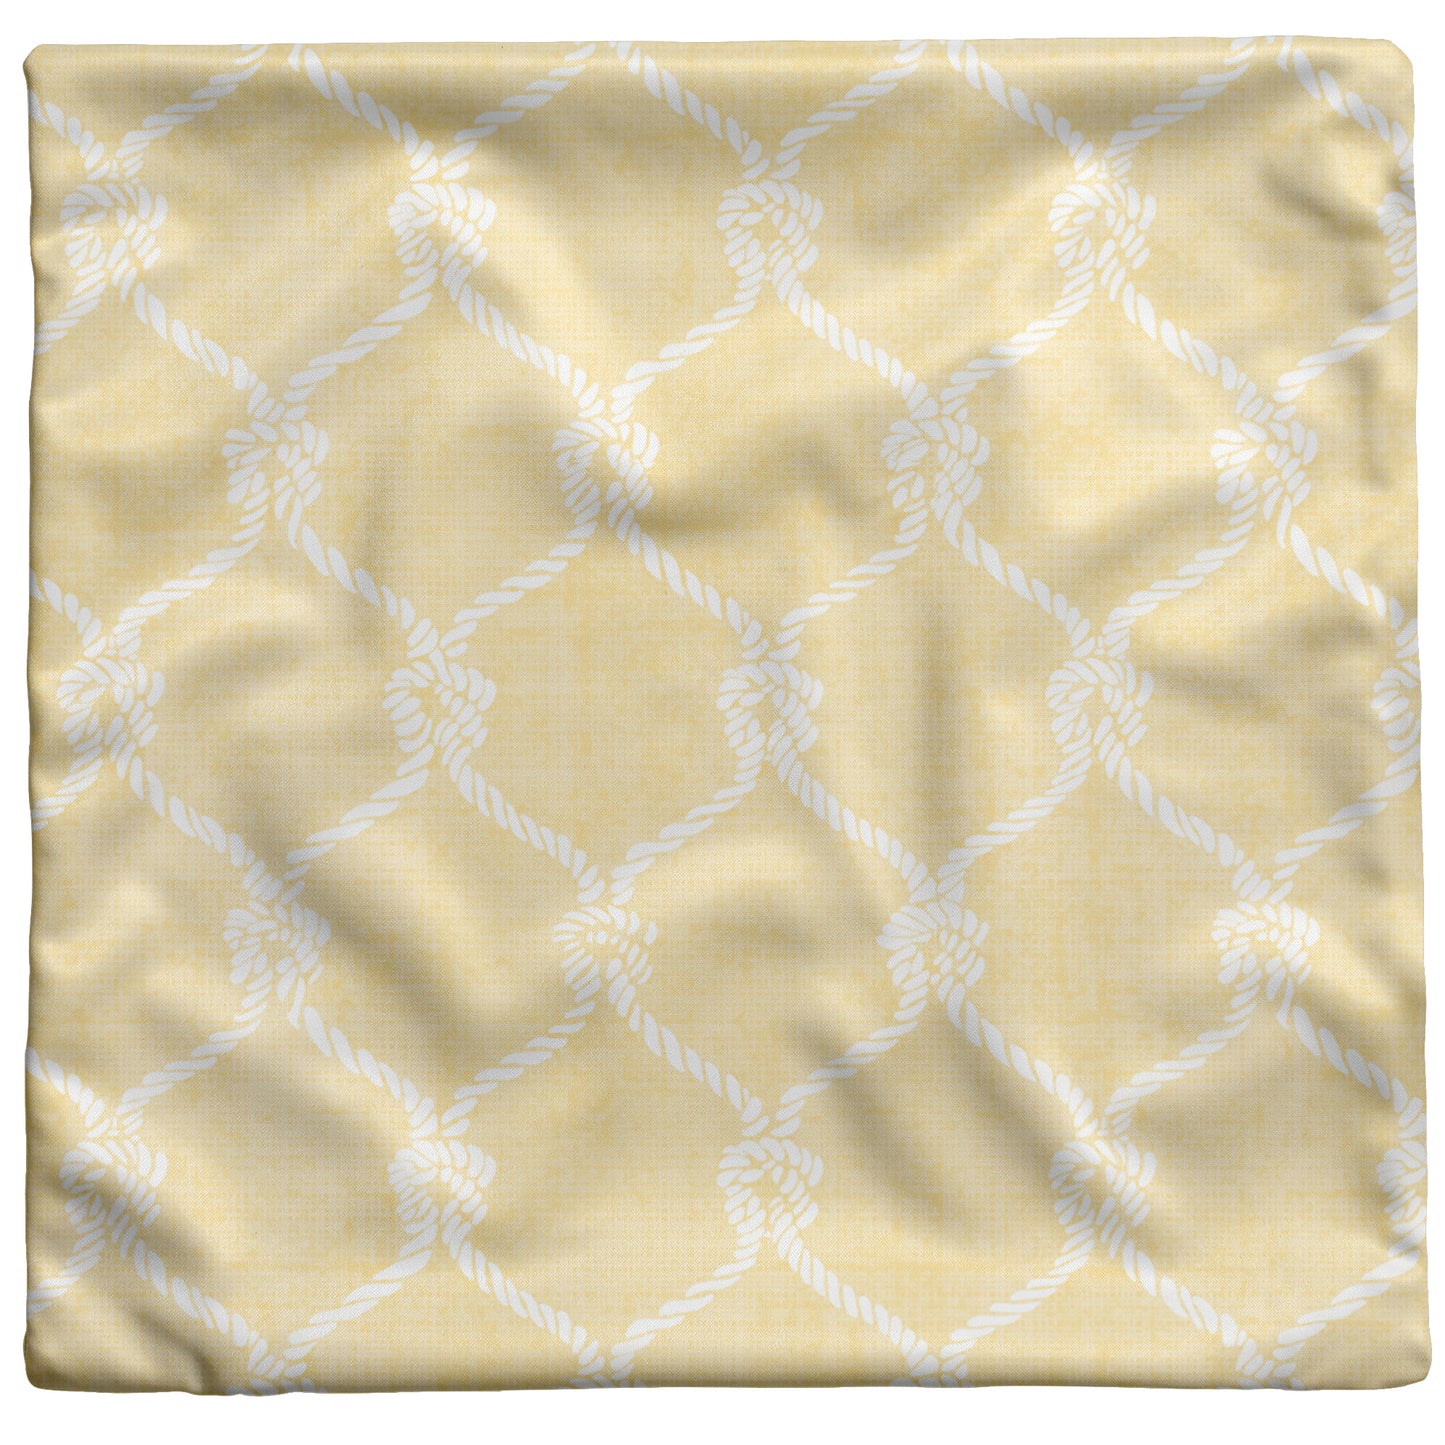 Nautical Netting Design on Yellow Linen Textured Background, Throw Pillow